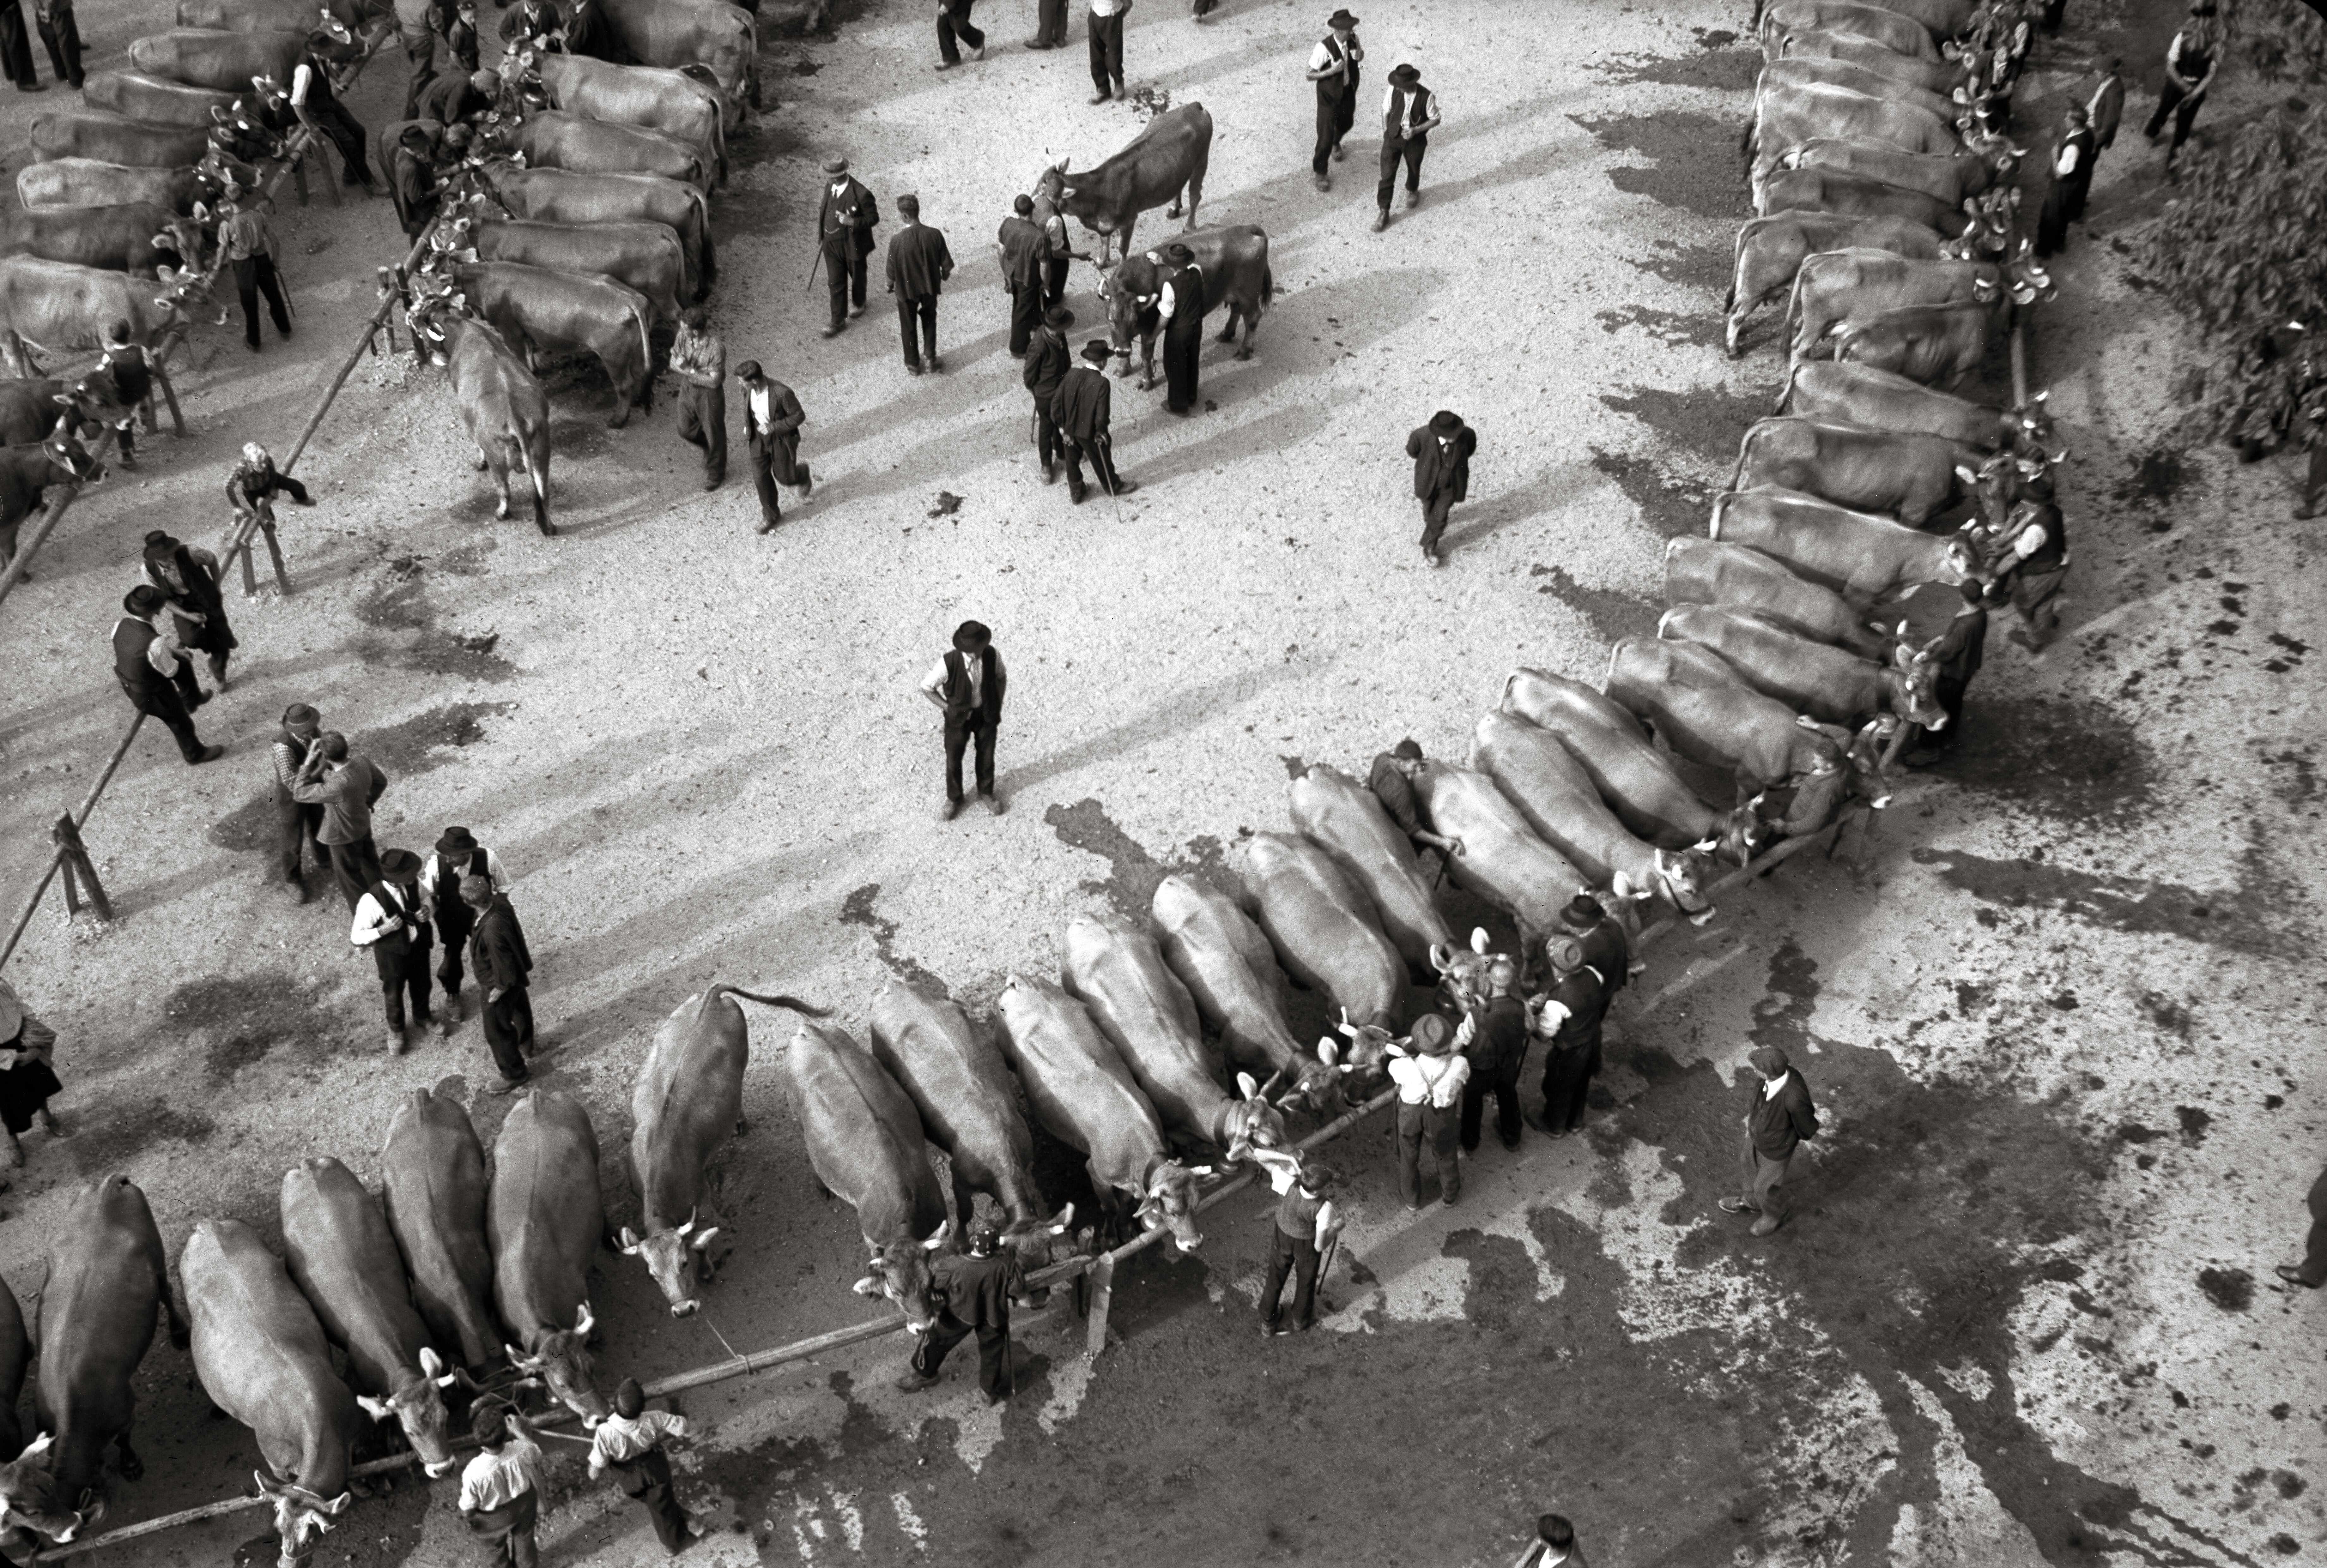 Выставка крупного рогатого скота. Снято с церковной башни, 1942. Фотограф Леонард фон Матт